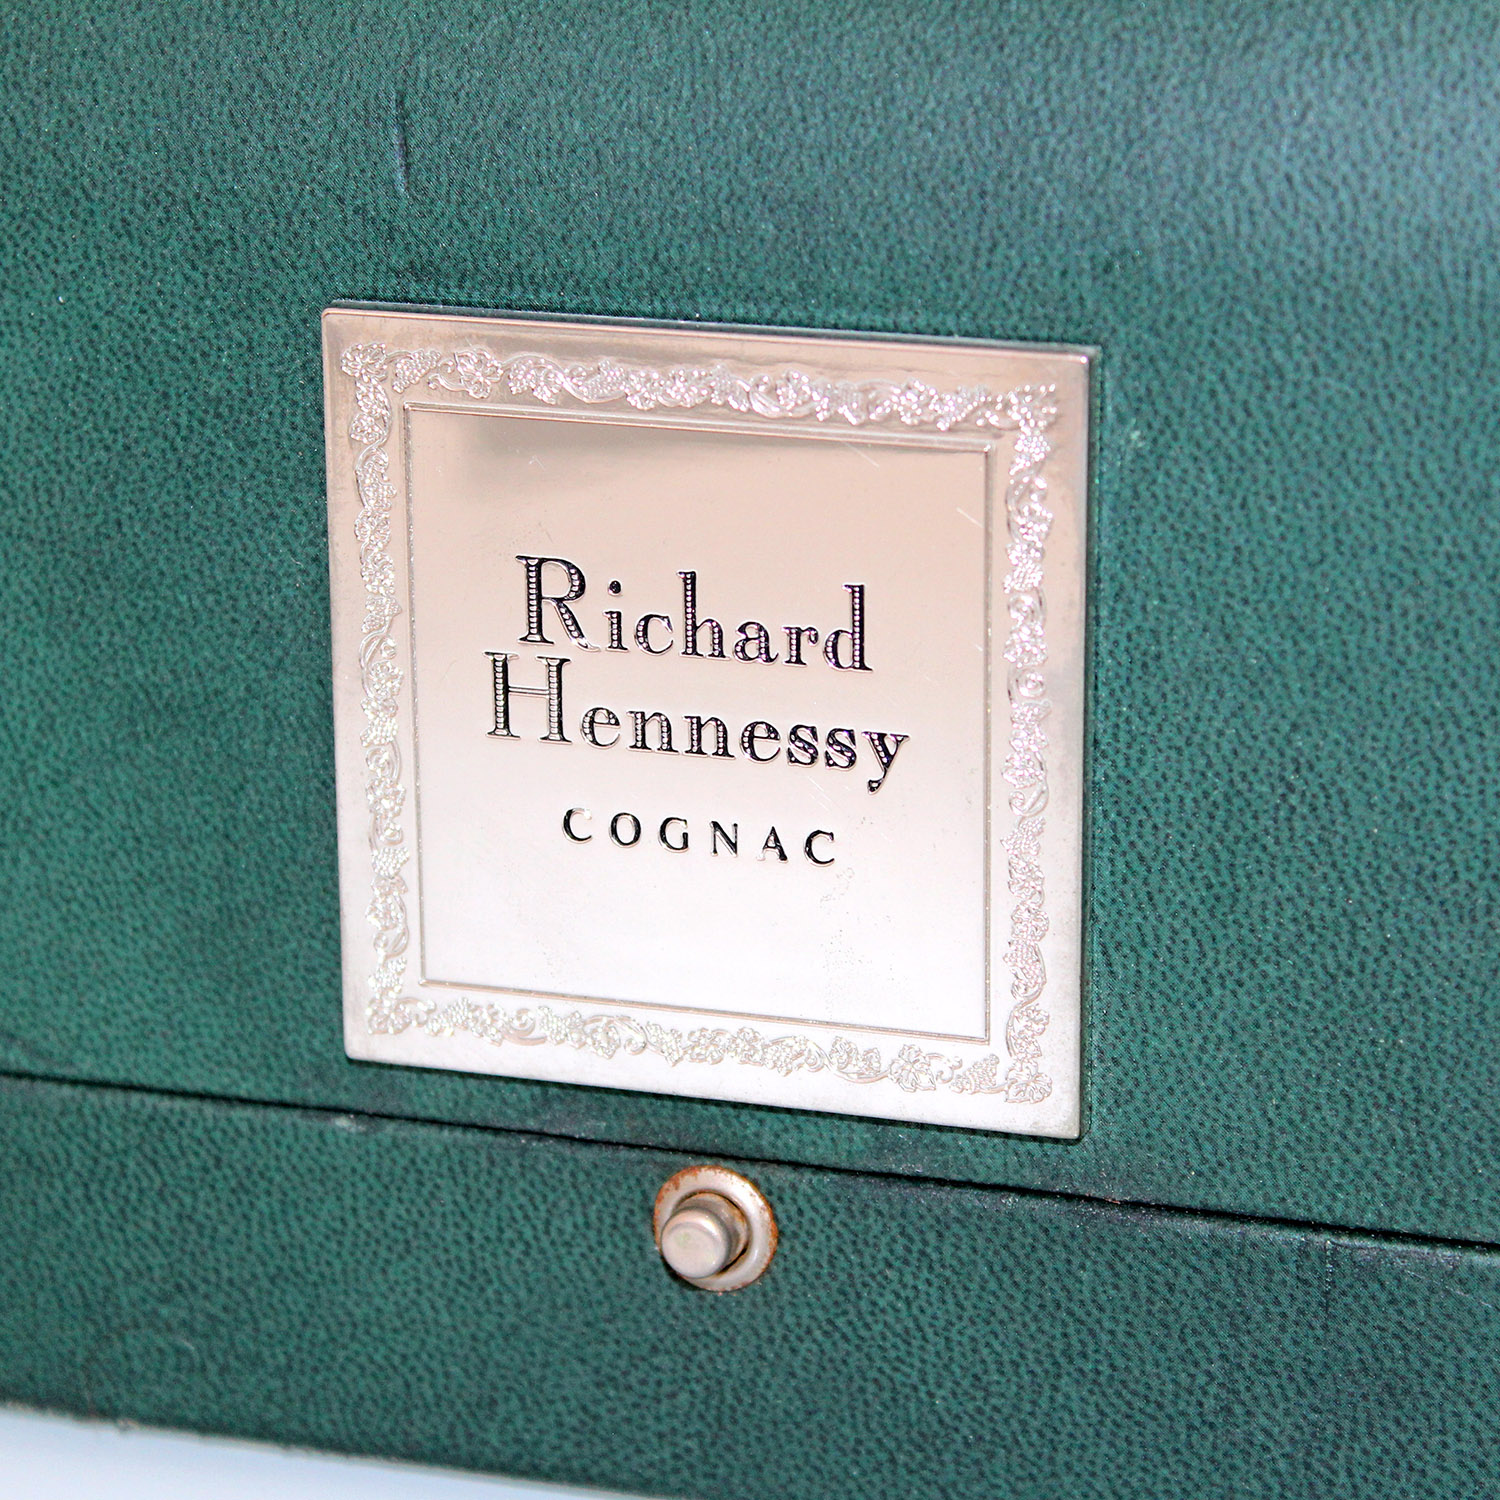 Richard Hennessy Cognac 1990s incl Display box 2